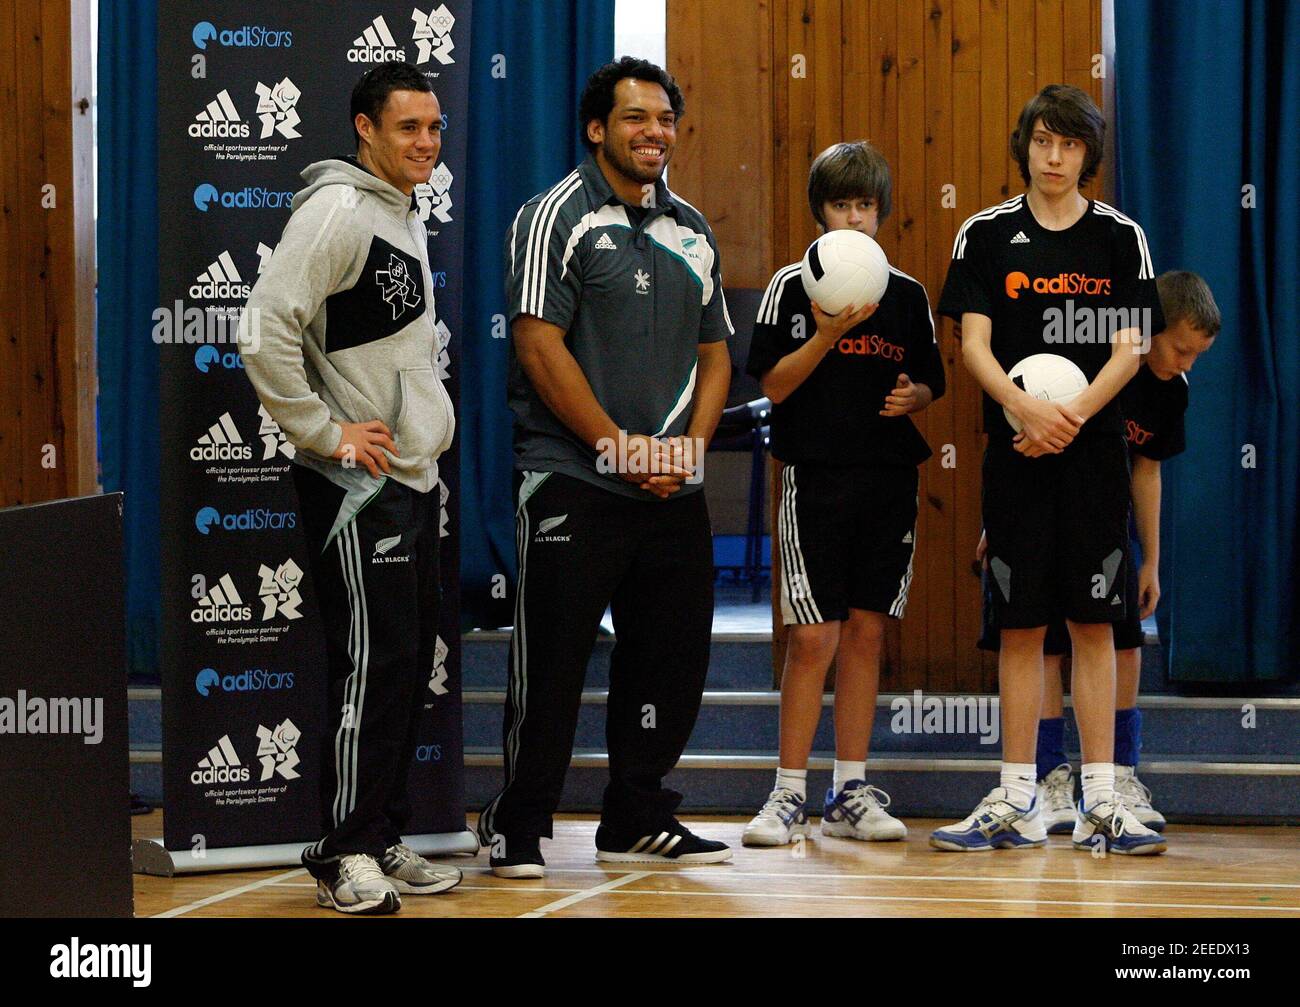 Rugby Union - New Zealand Adidas "adiStar" school visit, Edinburgh,  Scotland - 12/11/10 New Zealand's Dan